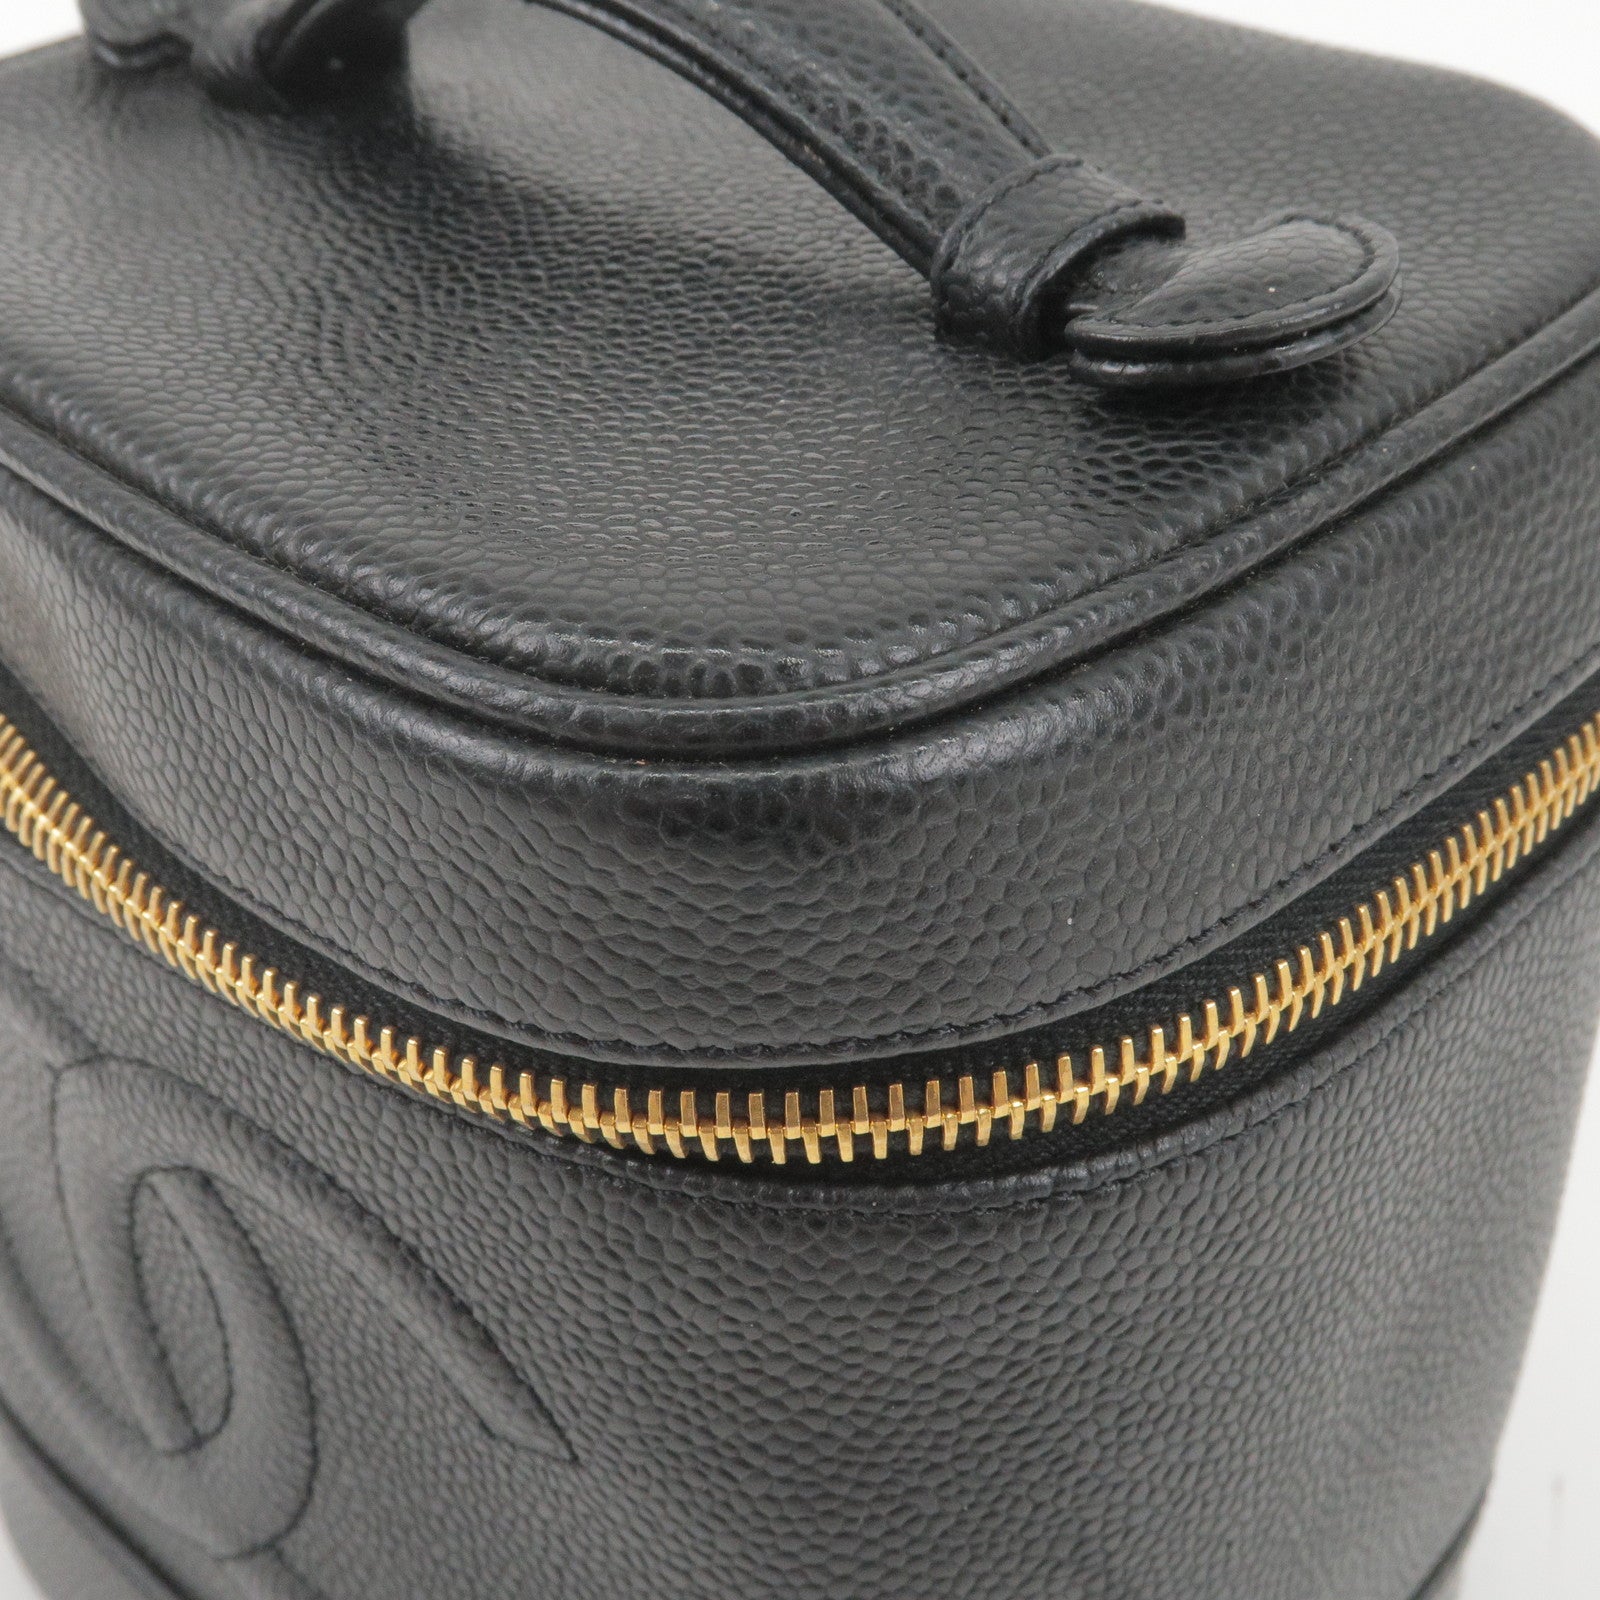 Chanel Black Caviar Leather Vanity Cosmetic Bag Chanel